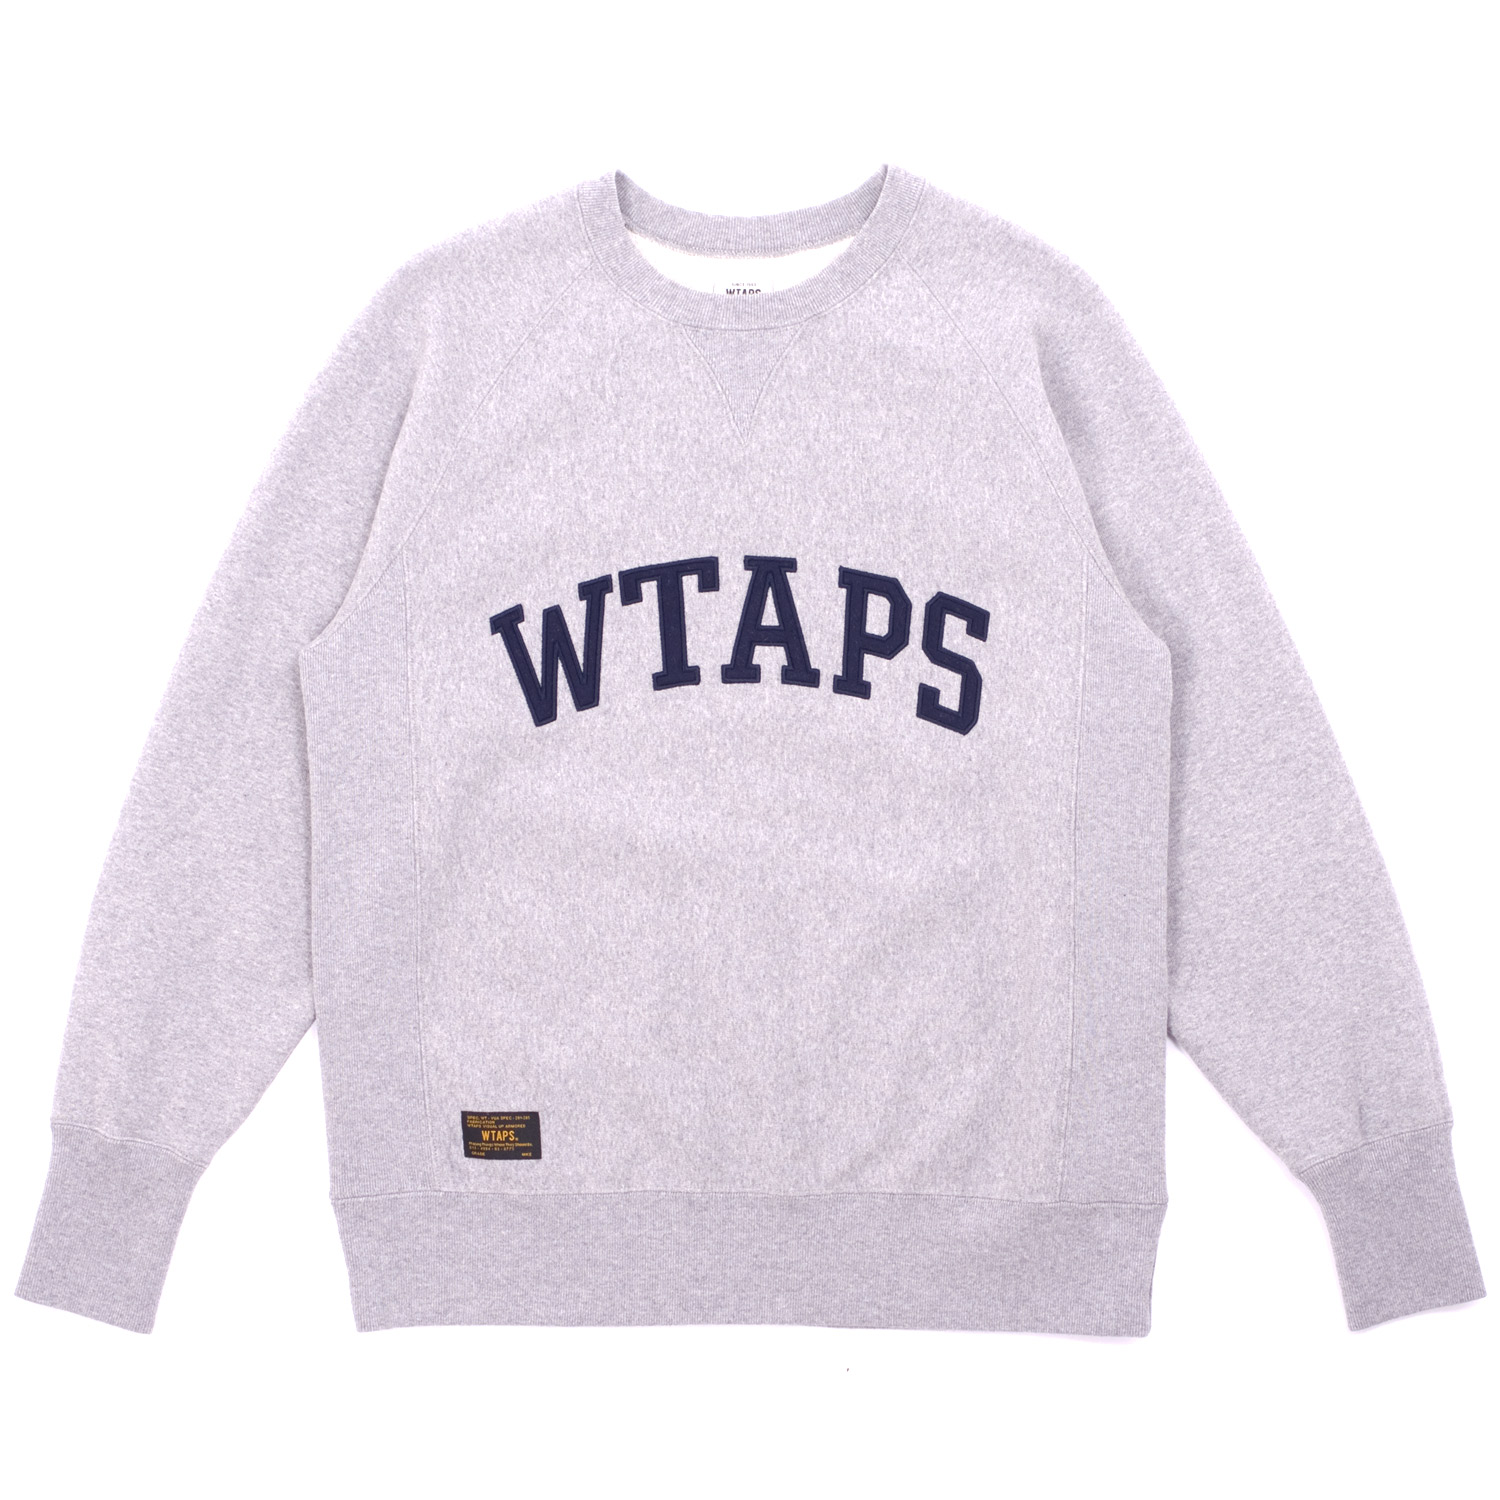 Wtaps Design Crewneck Sweatshirt 02 | FIRMAMENT - Berlin Renaissance